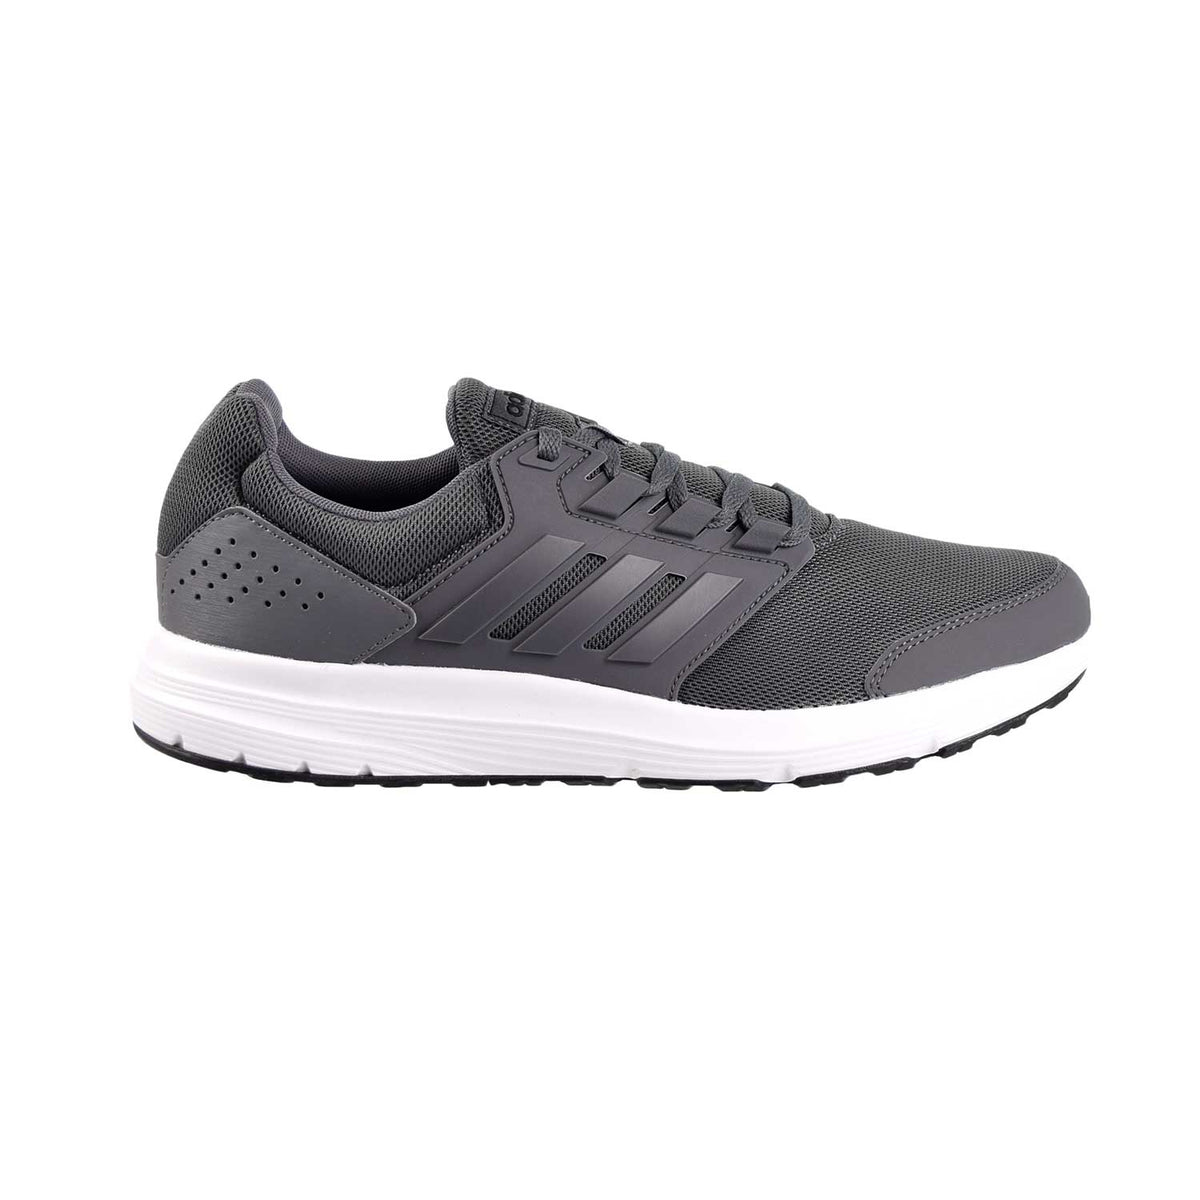 Adidas Galaxy 4 Mens Shoes Grey/Grey 